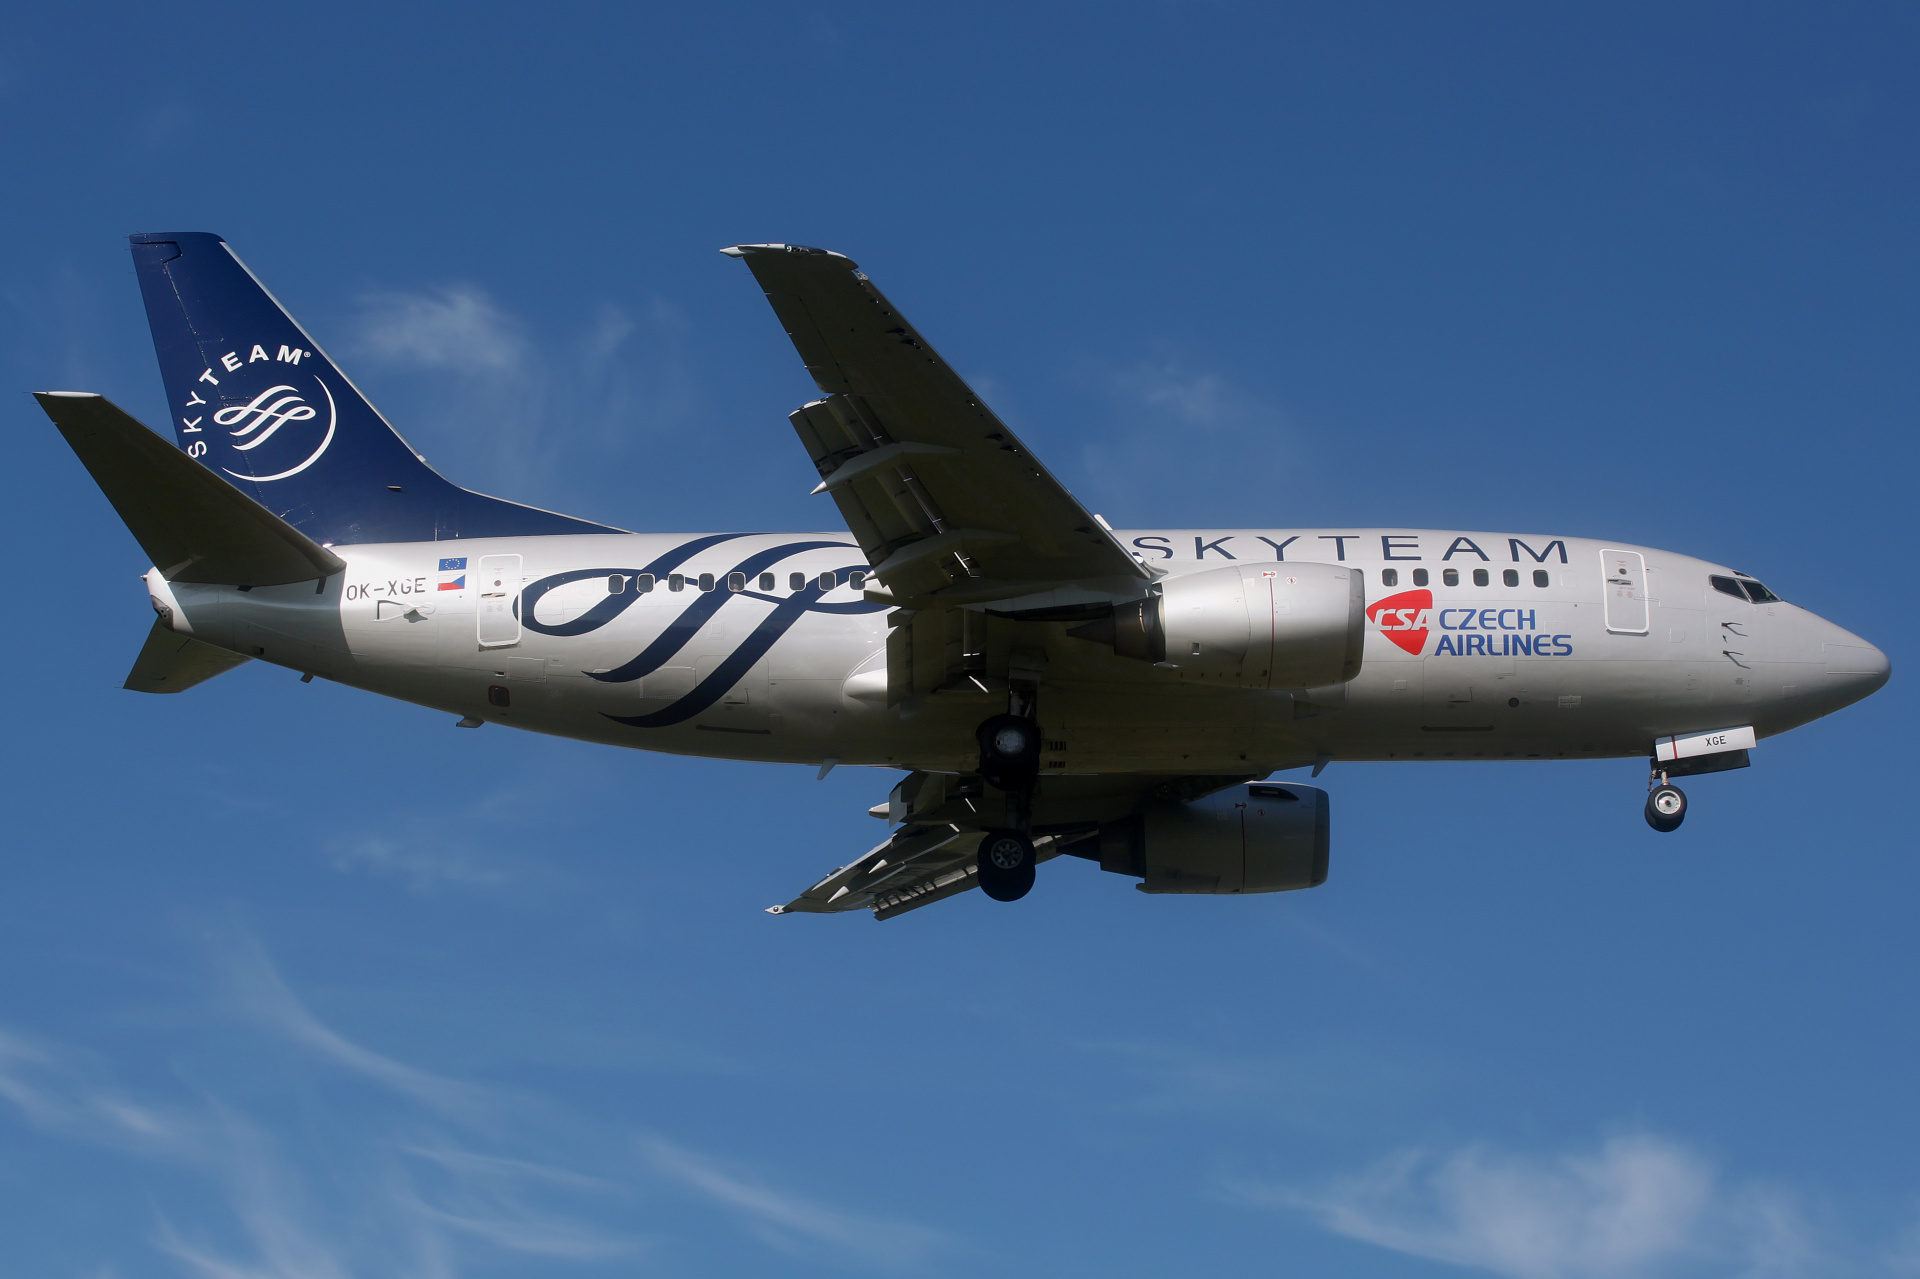 OK-XGE (SkyTeam livery) (Aircraft » EPWA Spotting » Boeing 737-500 » CSA Czech Airlines)